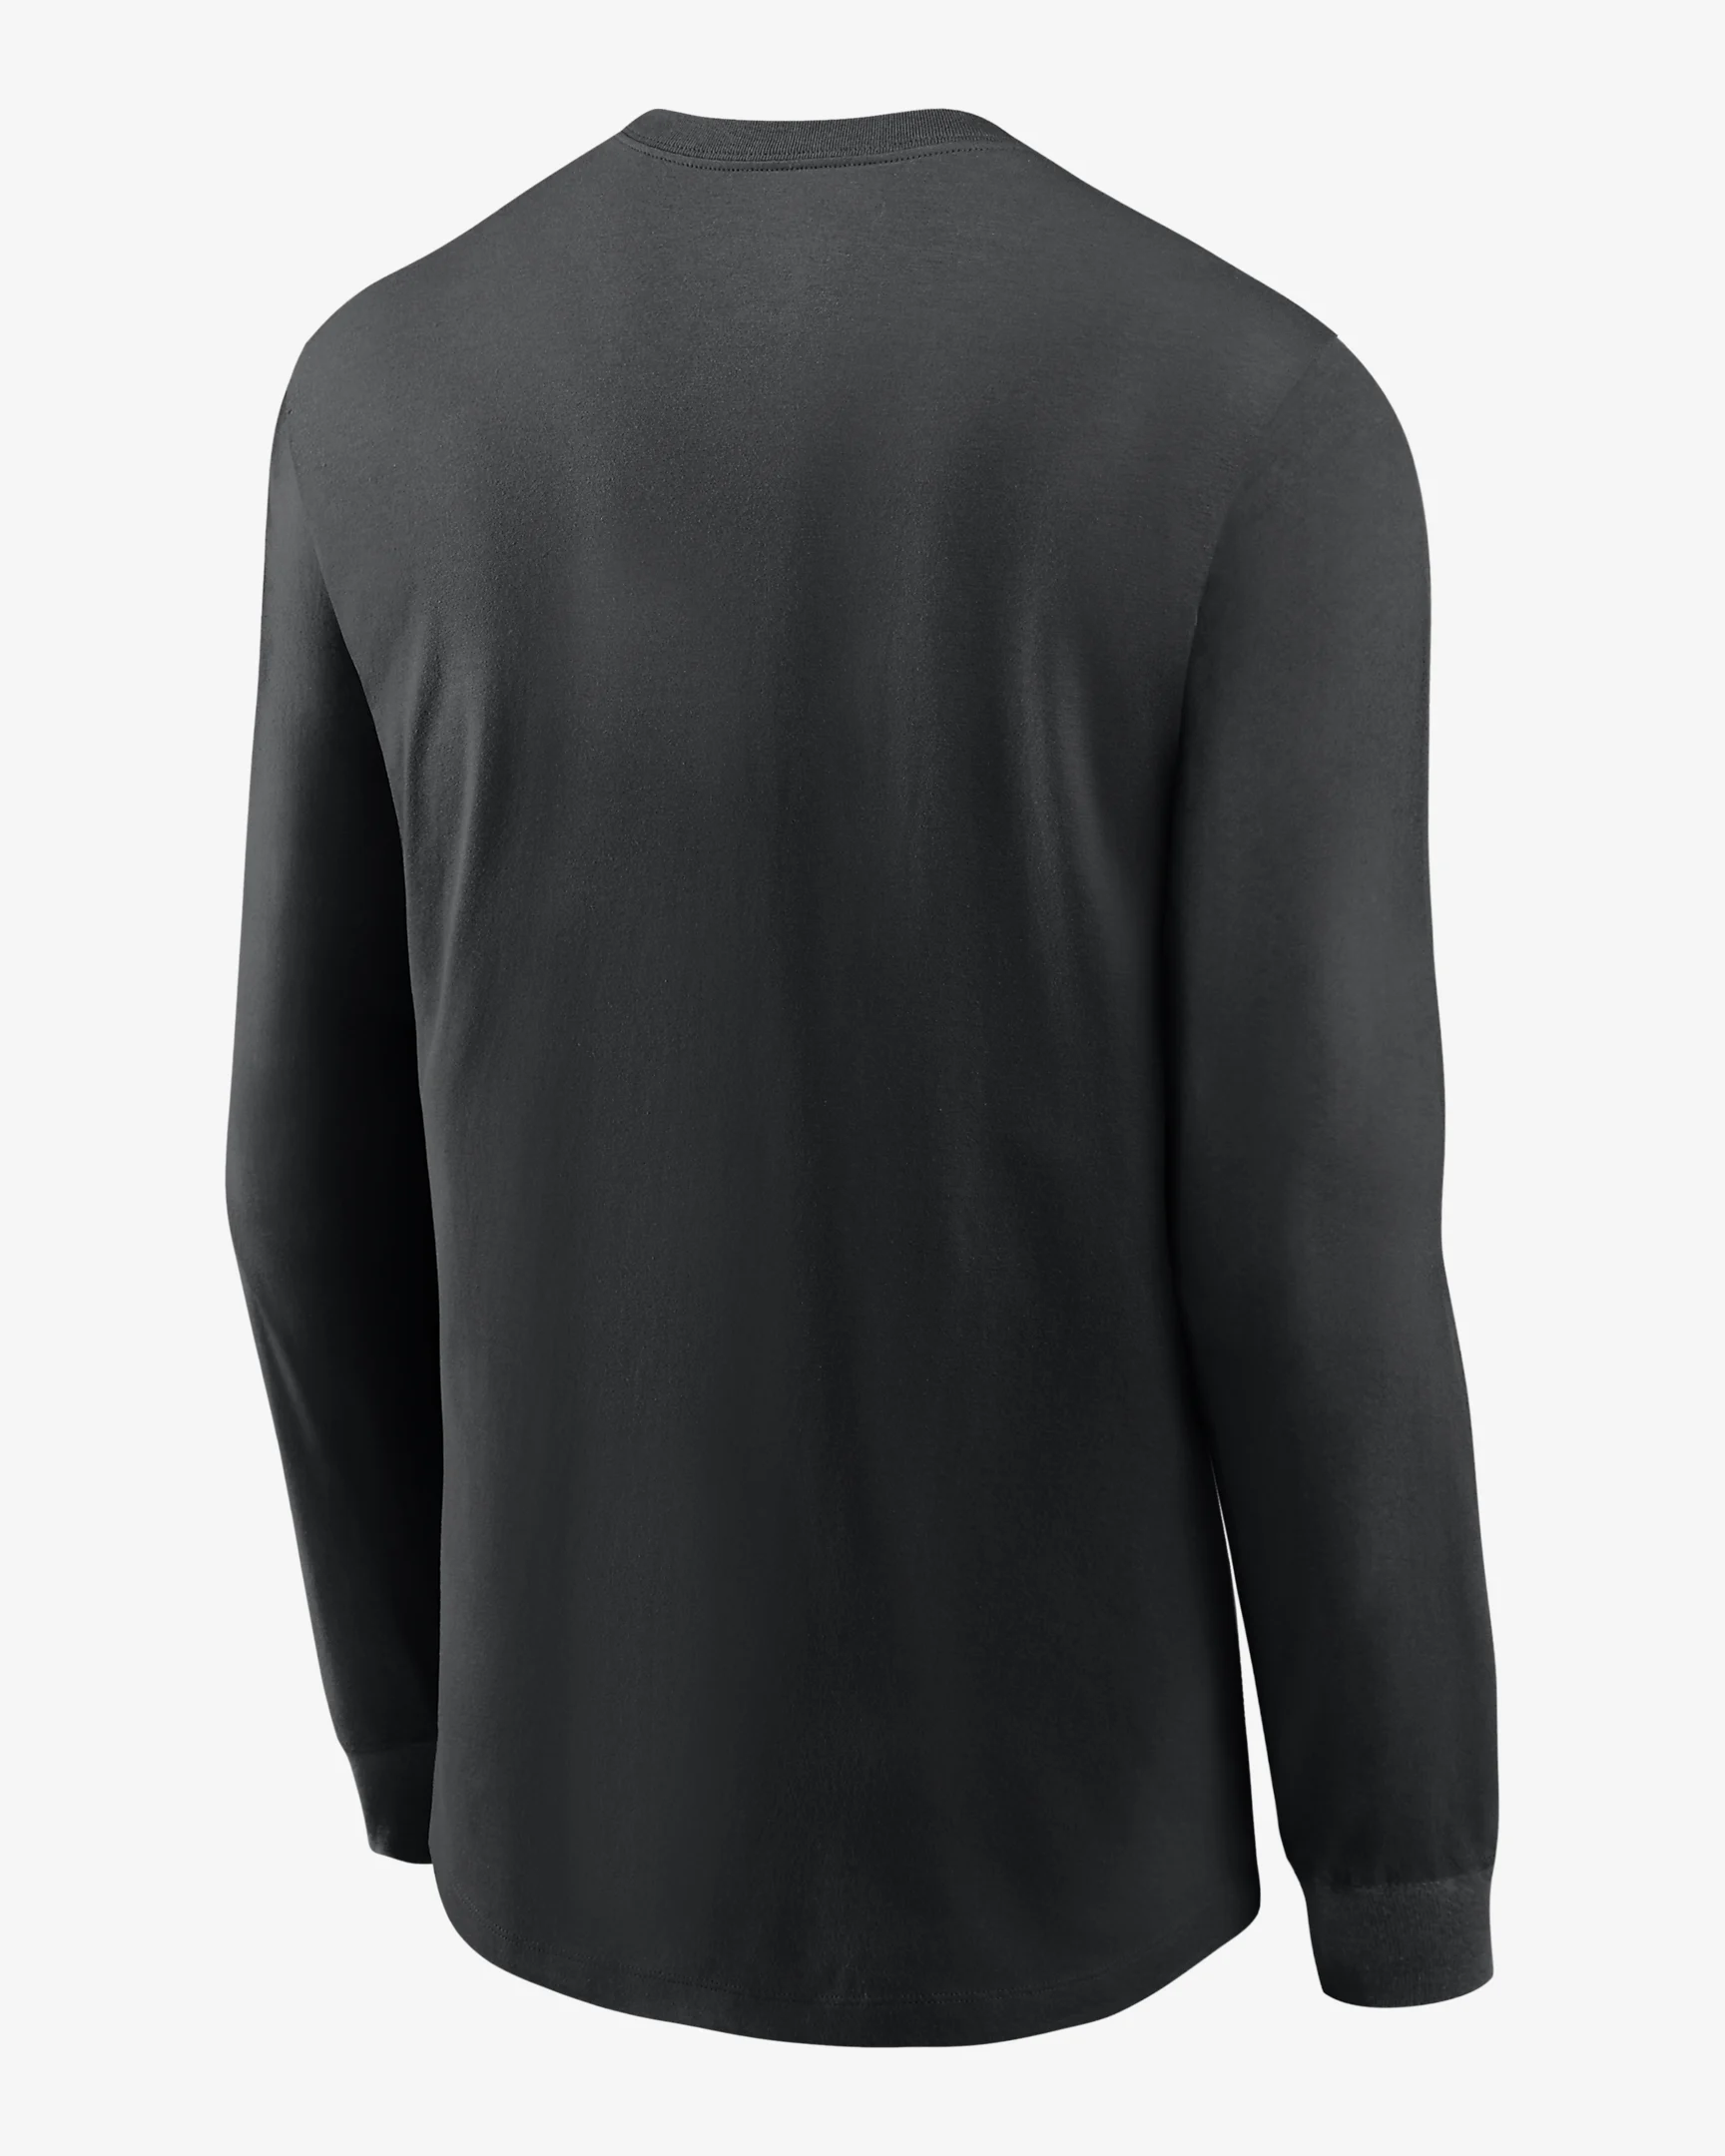 Nike San Francisco Giants Over Arch Long Sleeve T-Shirt